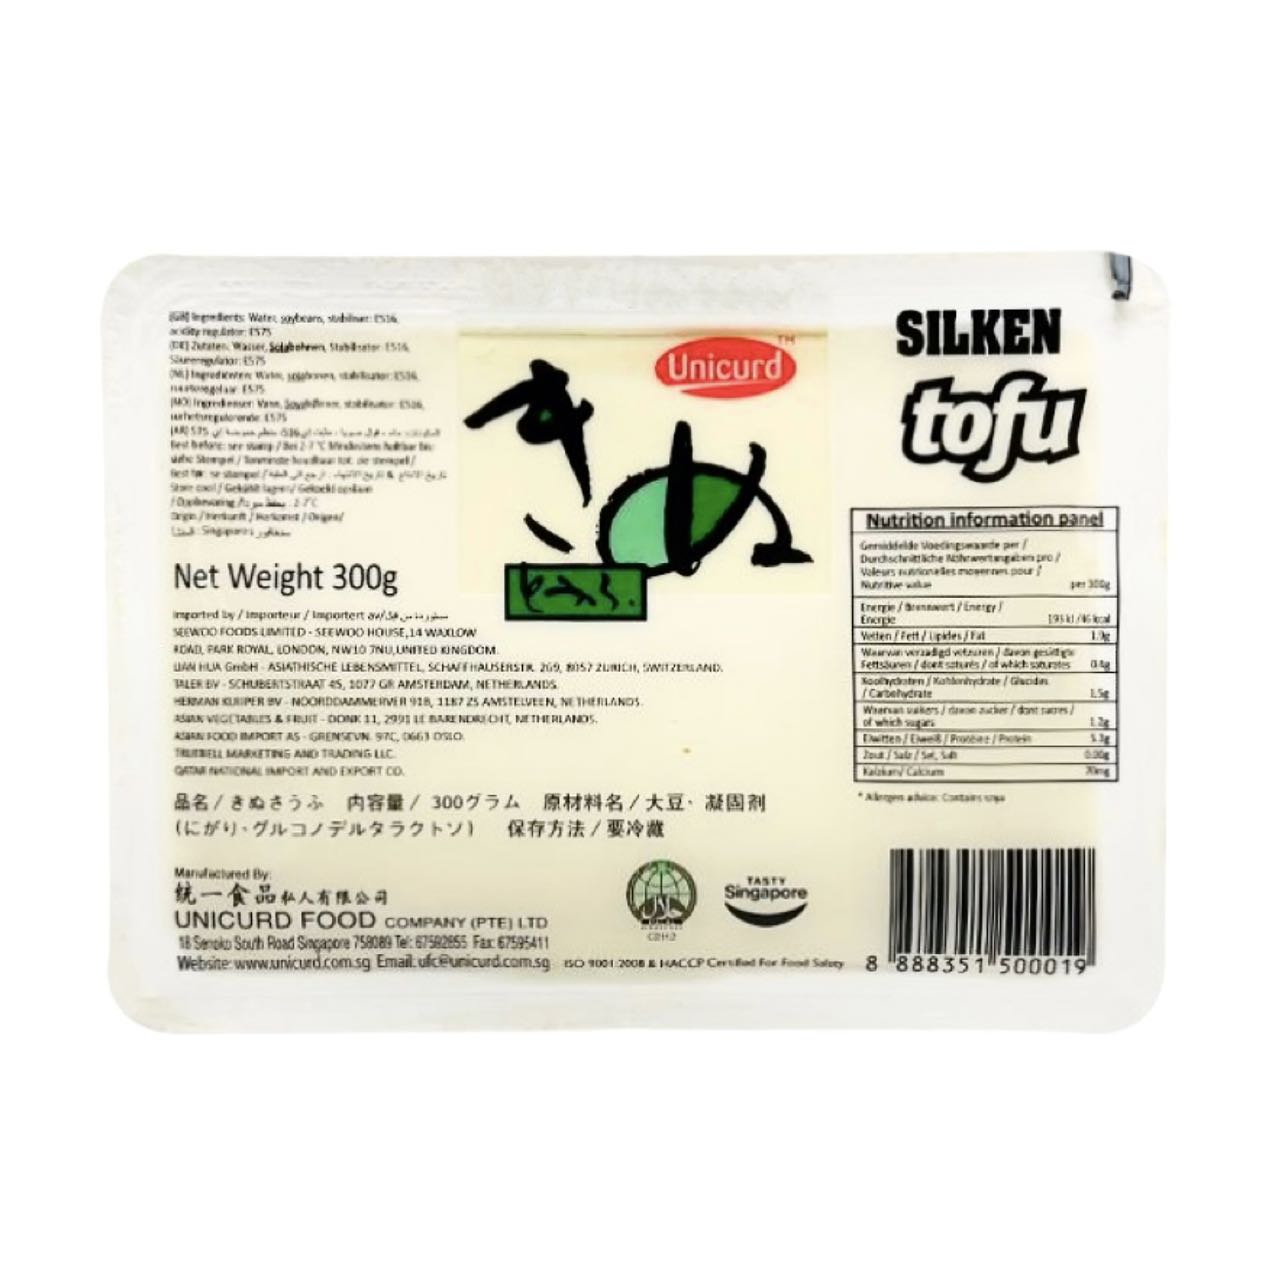 UNICURD silken tofu 300g